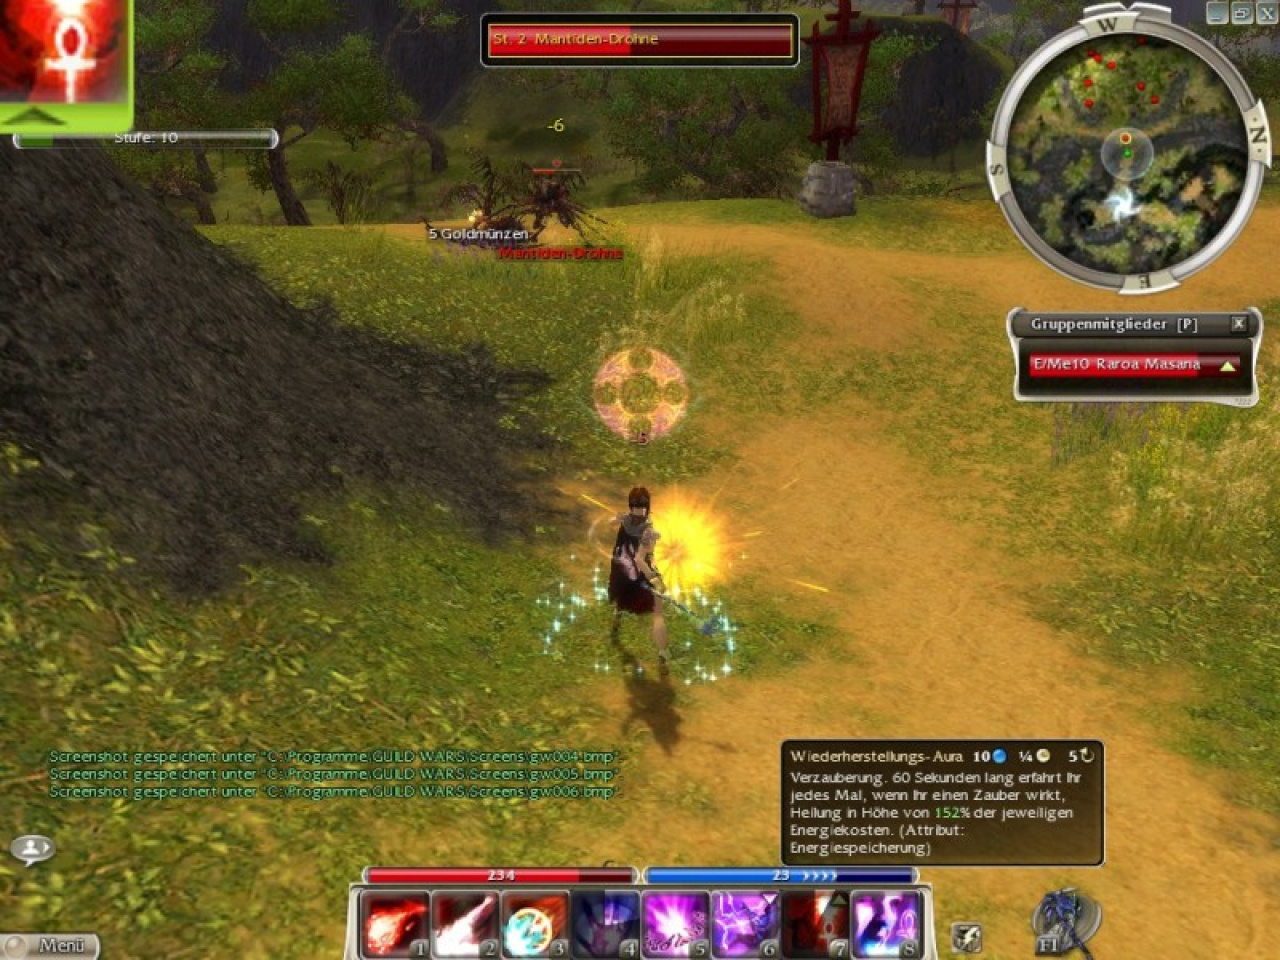 Guild Wars FactionsComece a Jogar - Level Up Jogos Online